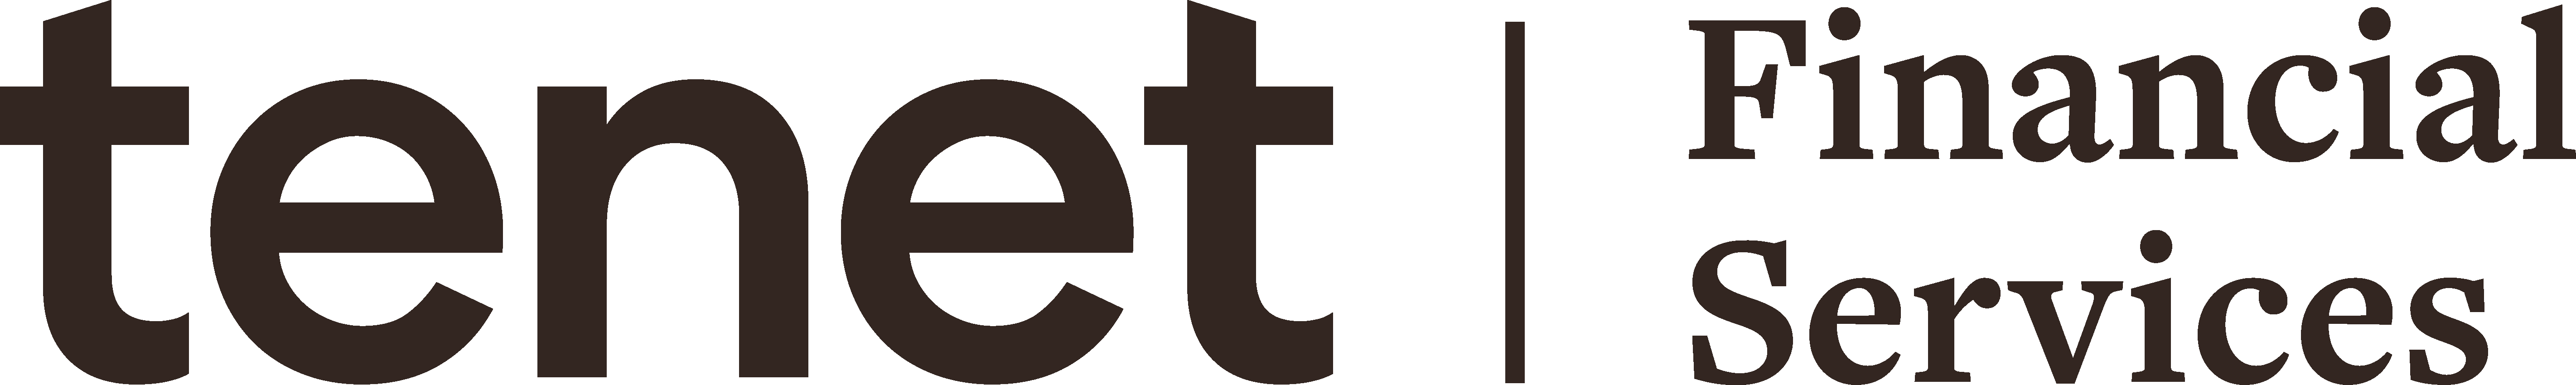 93217656 Tenet Financial Services Logo Umber RGB